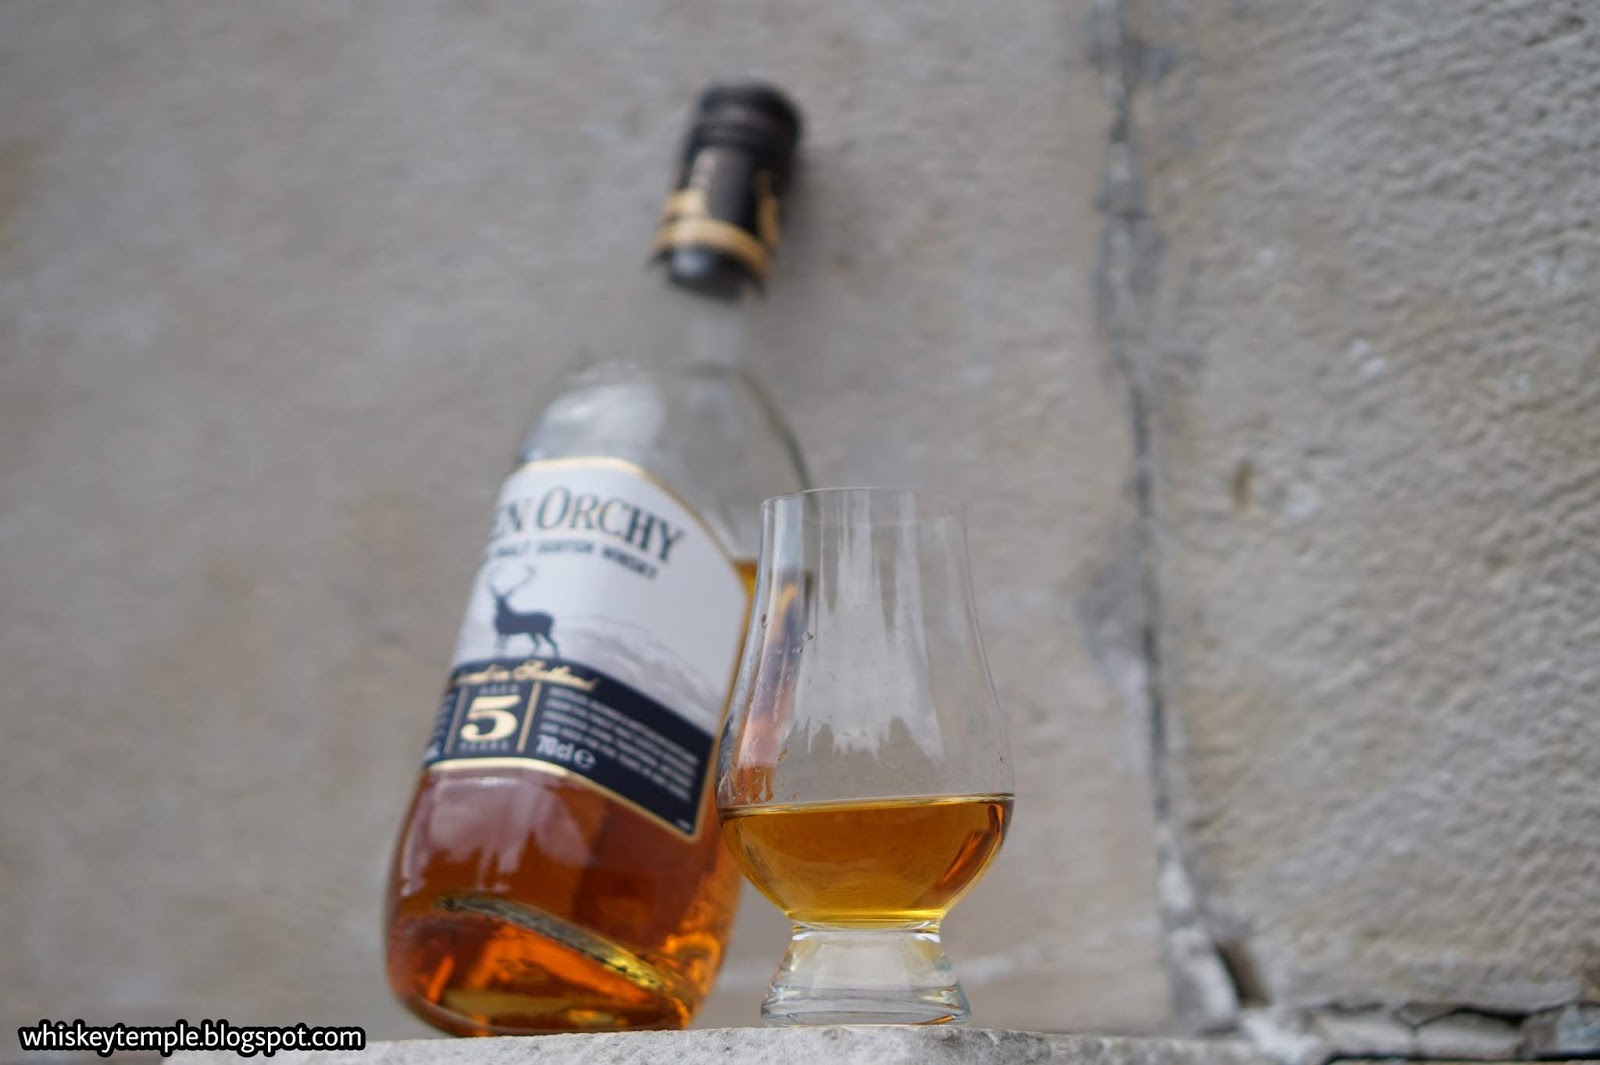 Glen Whiskeytemple 5 whisky Orchy – malt y.o. blended